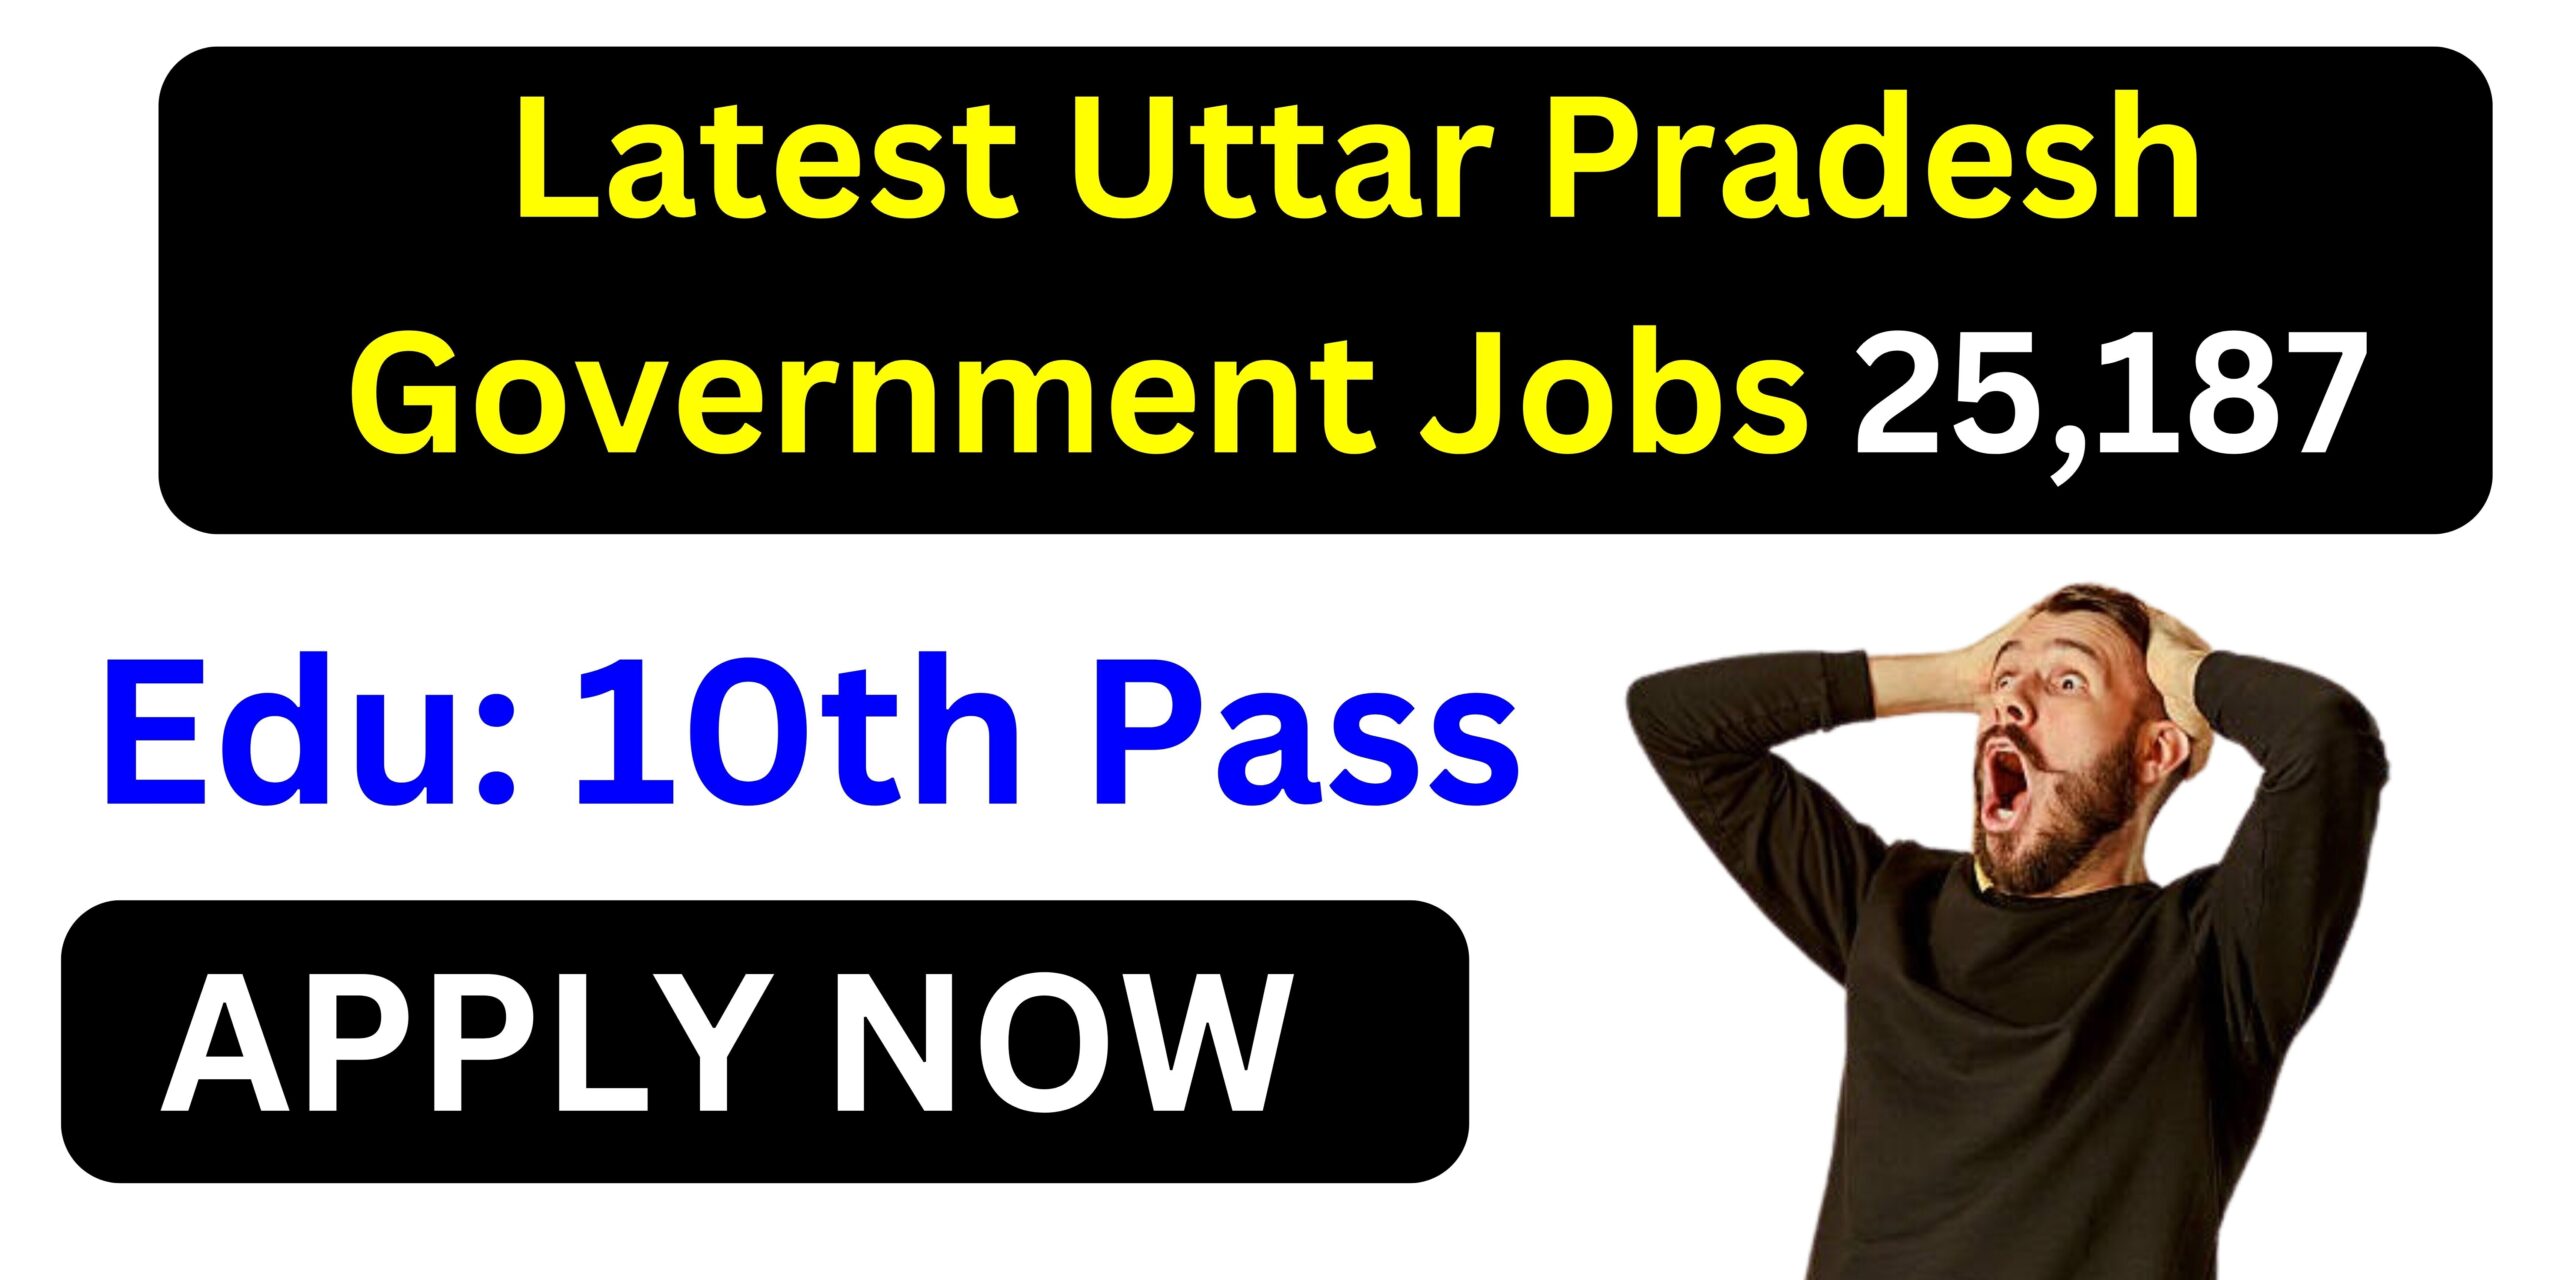 Latest Uttar Pradesh Government Jobs 25,187